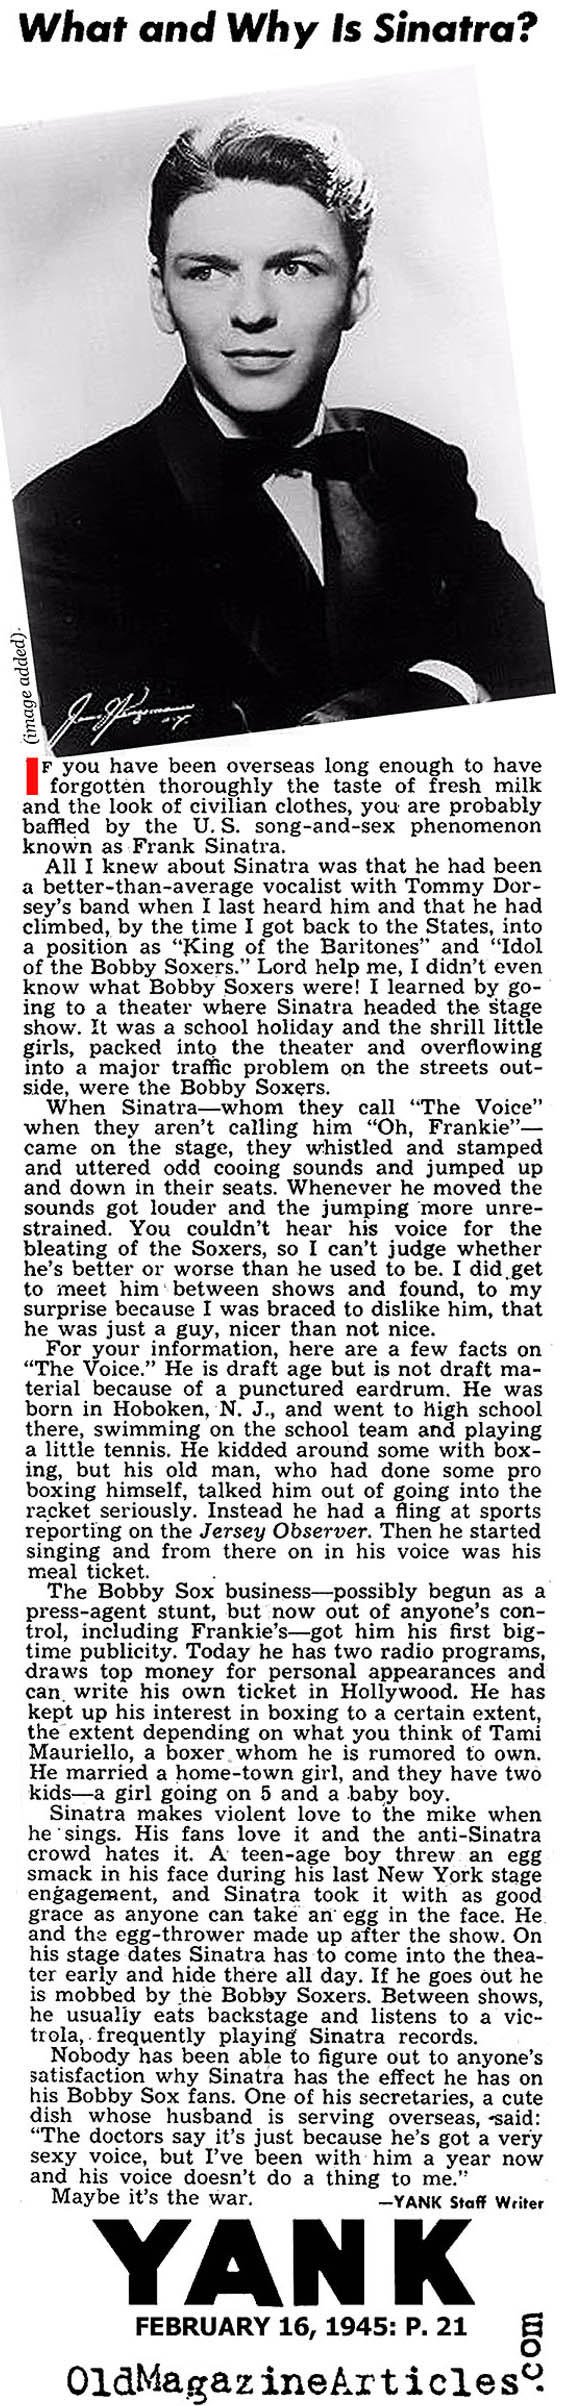 Young Frank Sinatra (Yank Magazine, 1945)